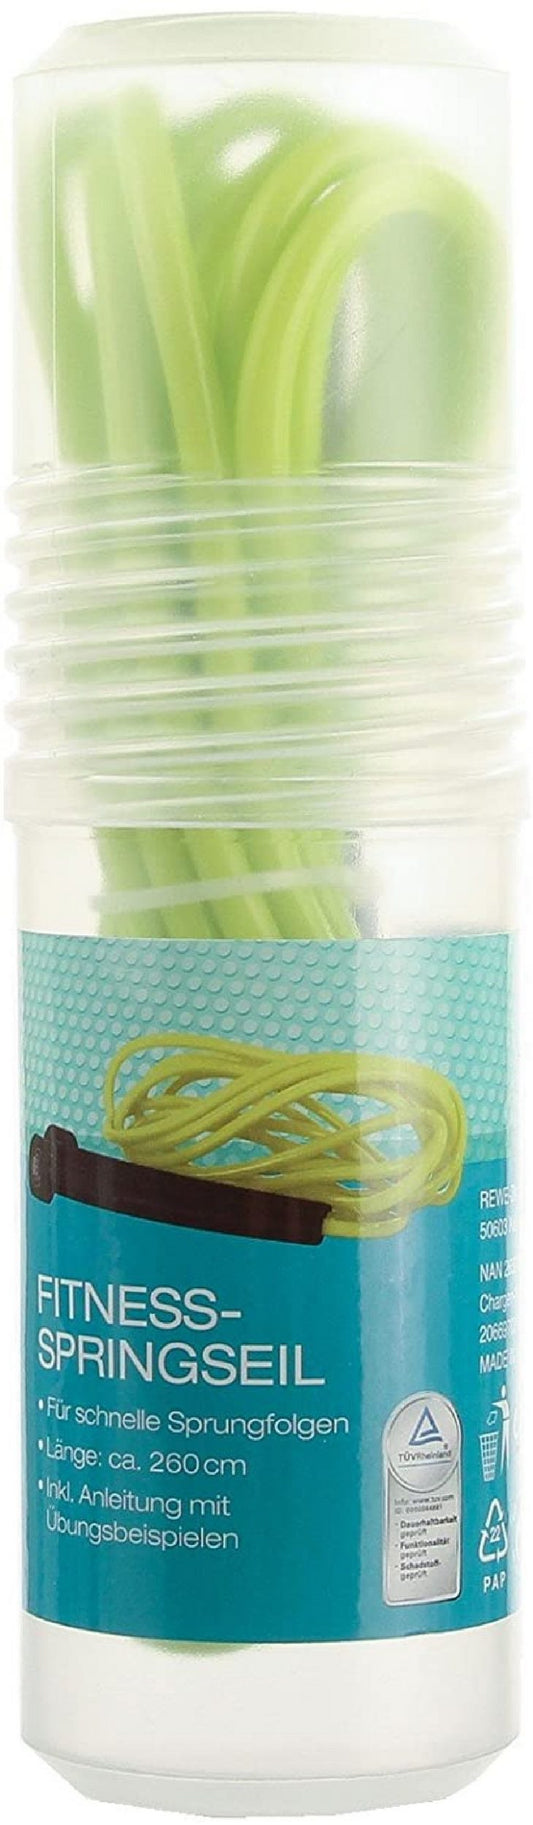 Springseil, Fitness-Seil For Sport, Farbe Grün, Gesamtlänge 260 cm